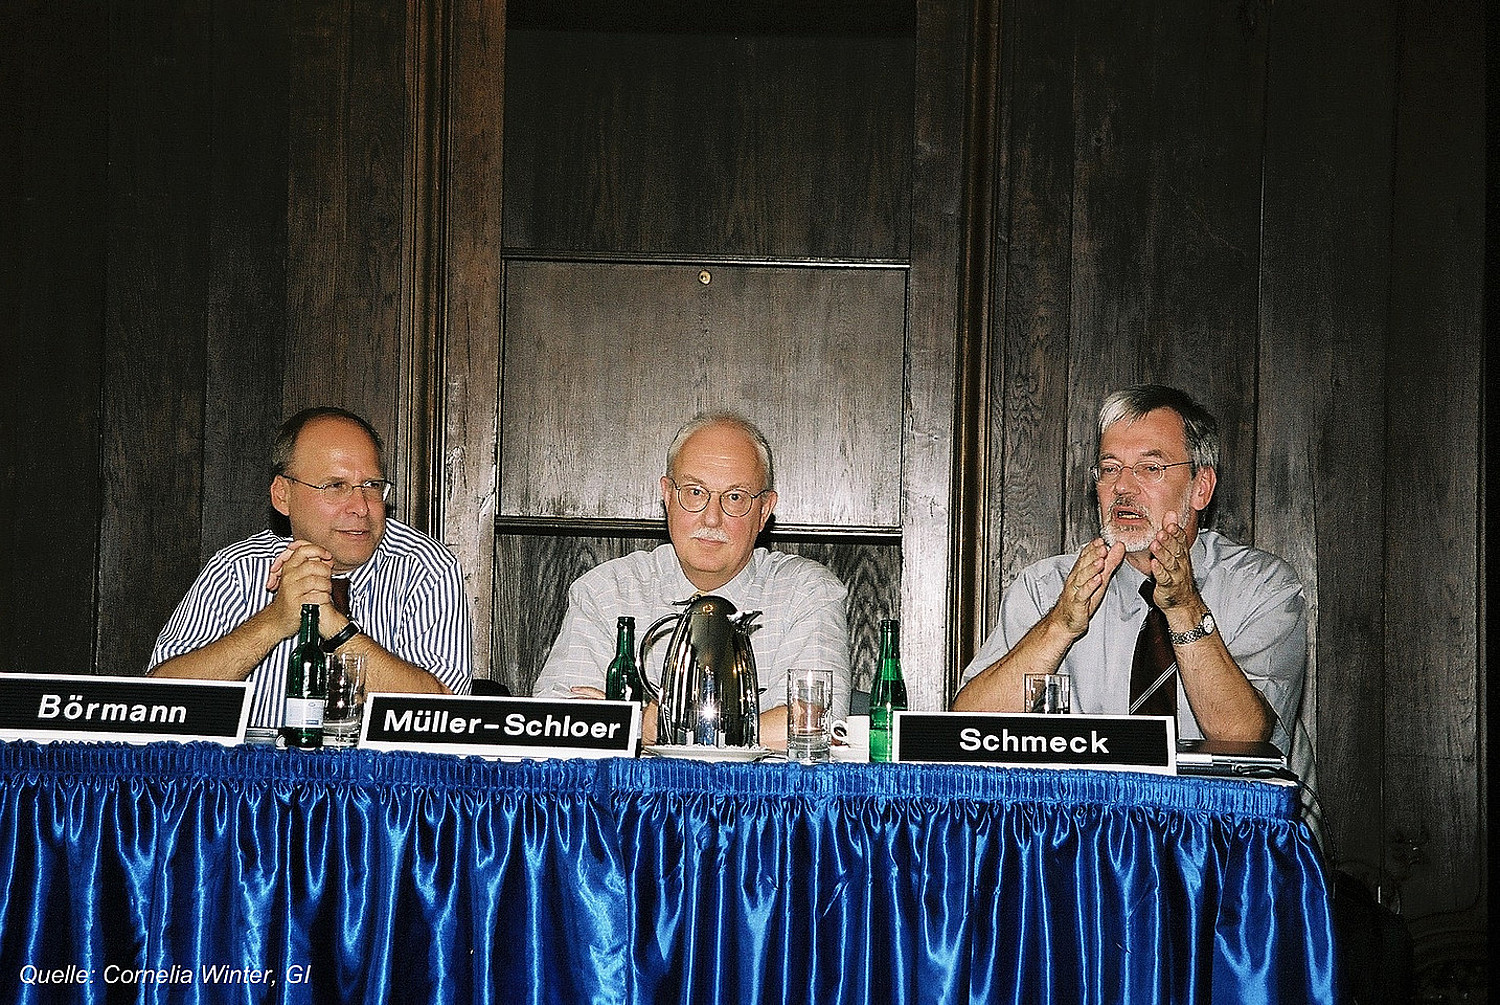 Press conference at Bayerischer Hof, Munich to announce foundation of OC initiative: Börmann, Müller-Schloer, Schmeck